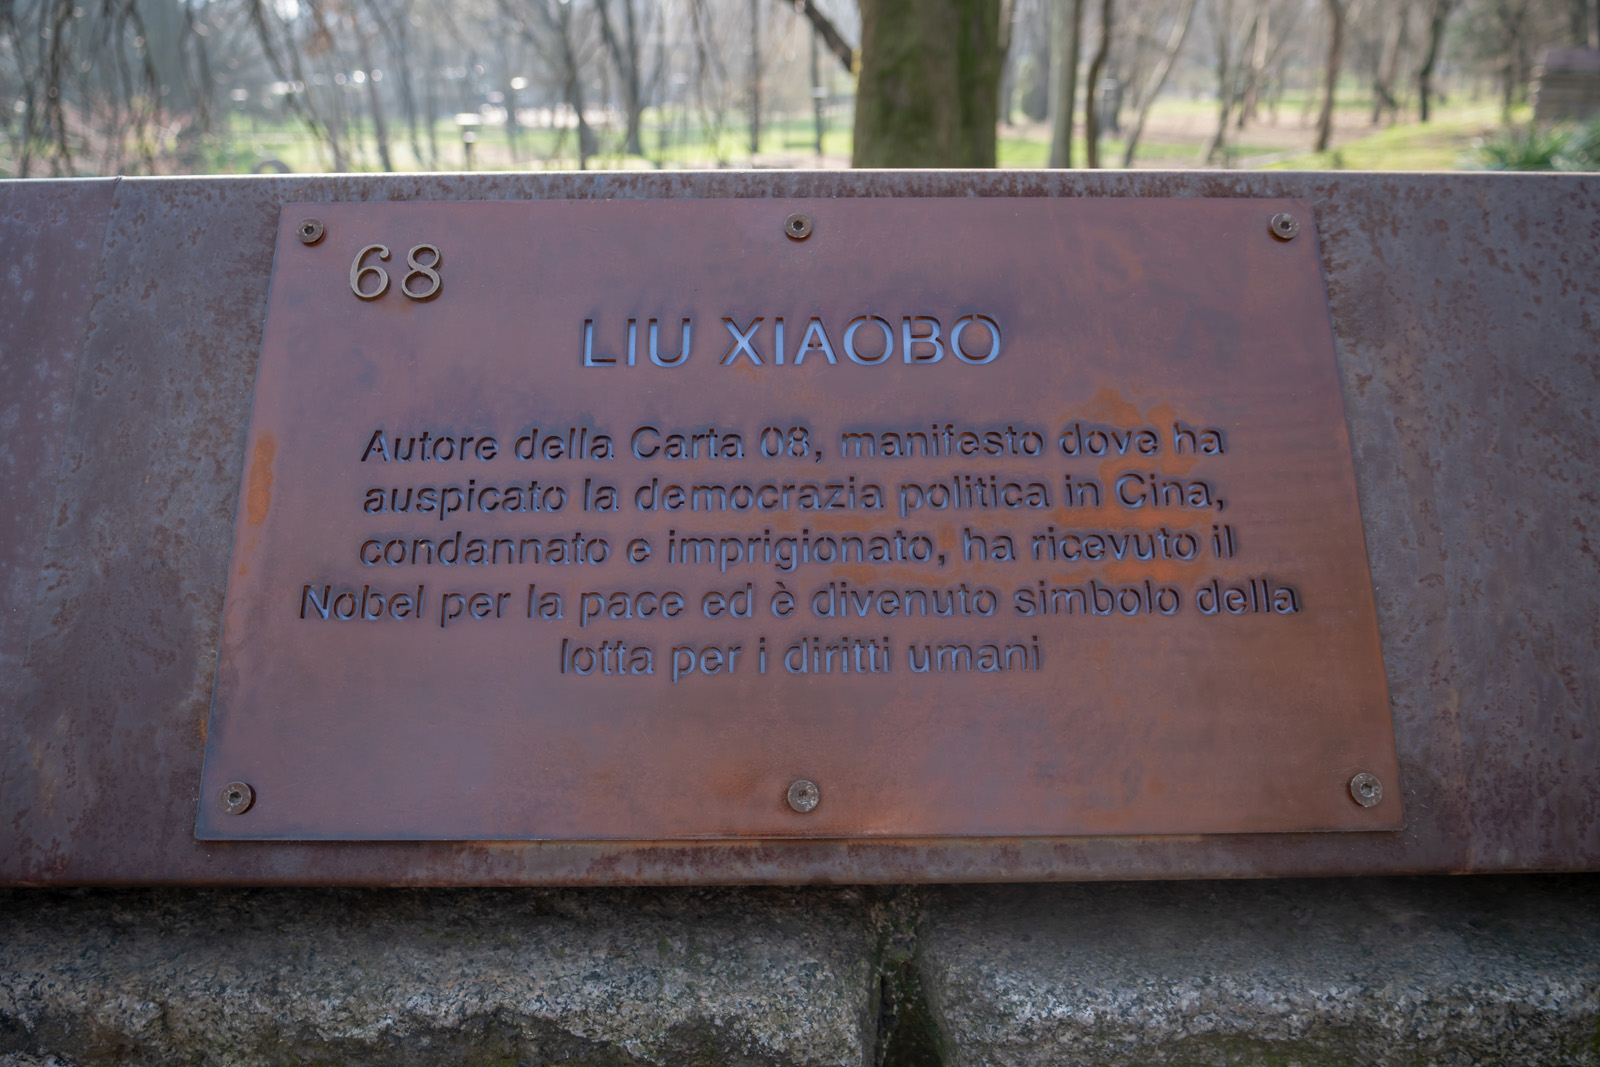 The plaque for Liu Xiaobo